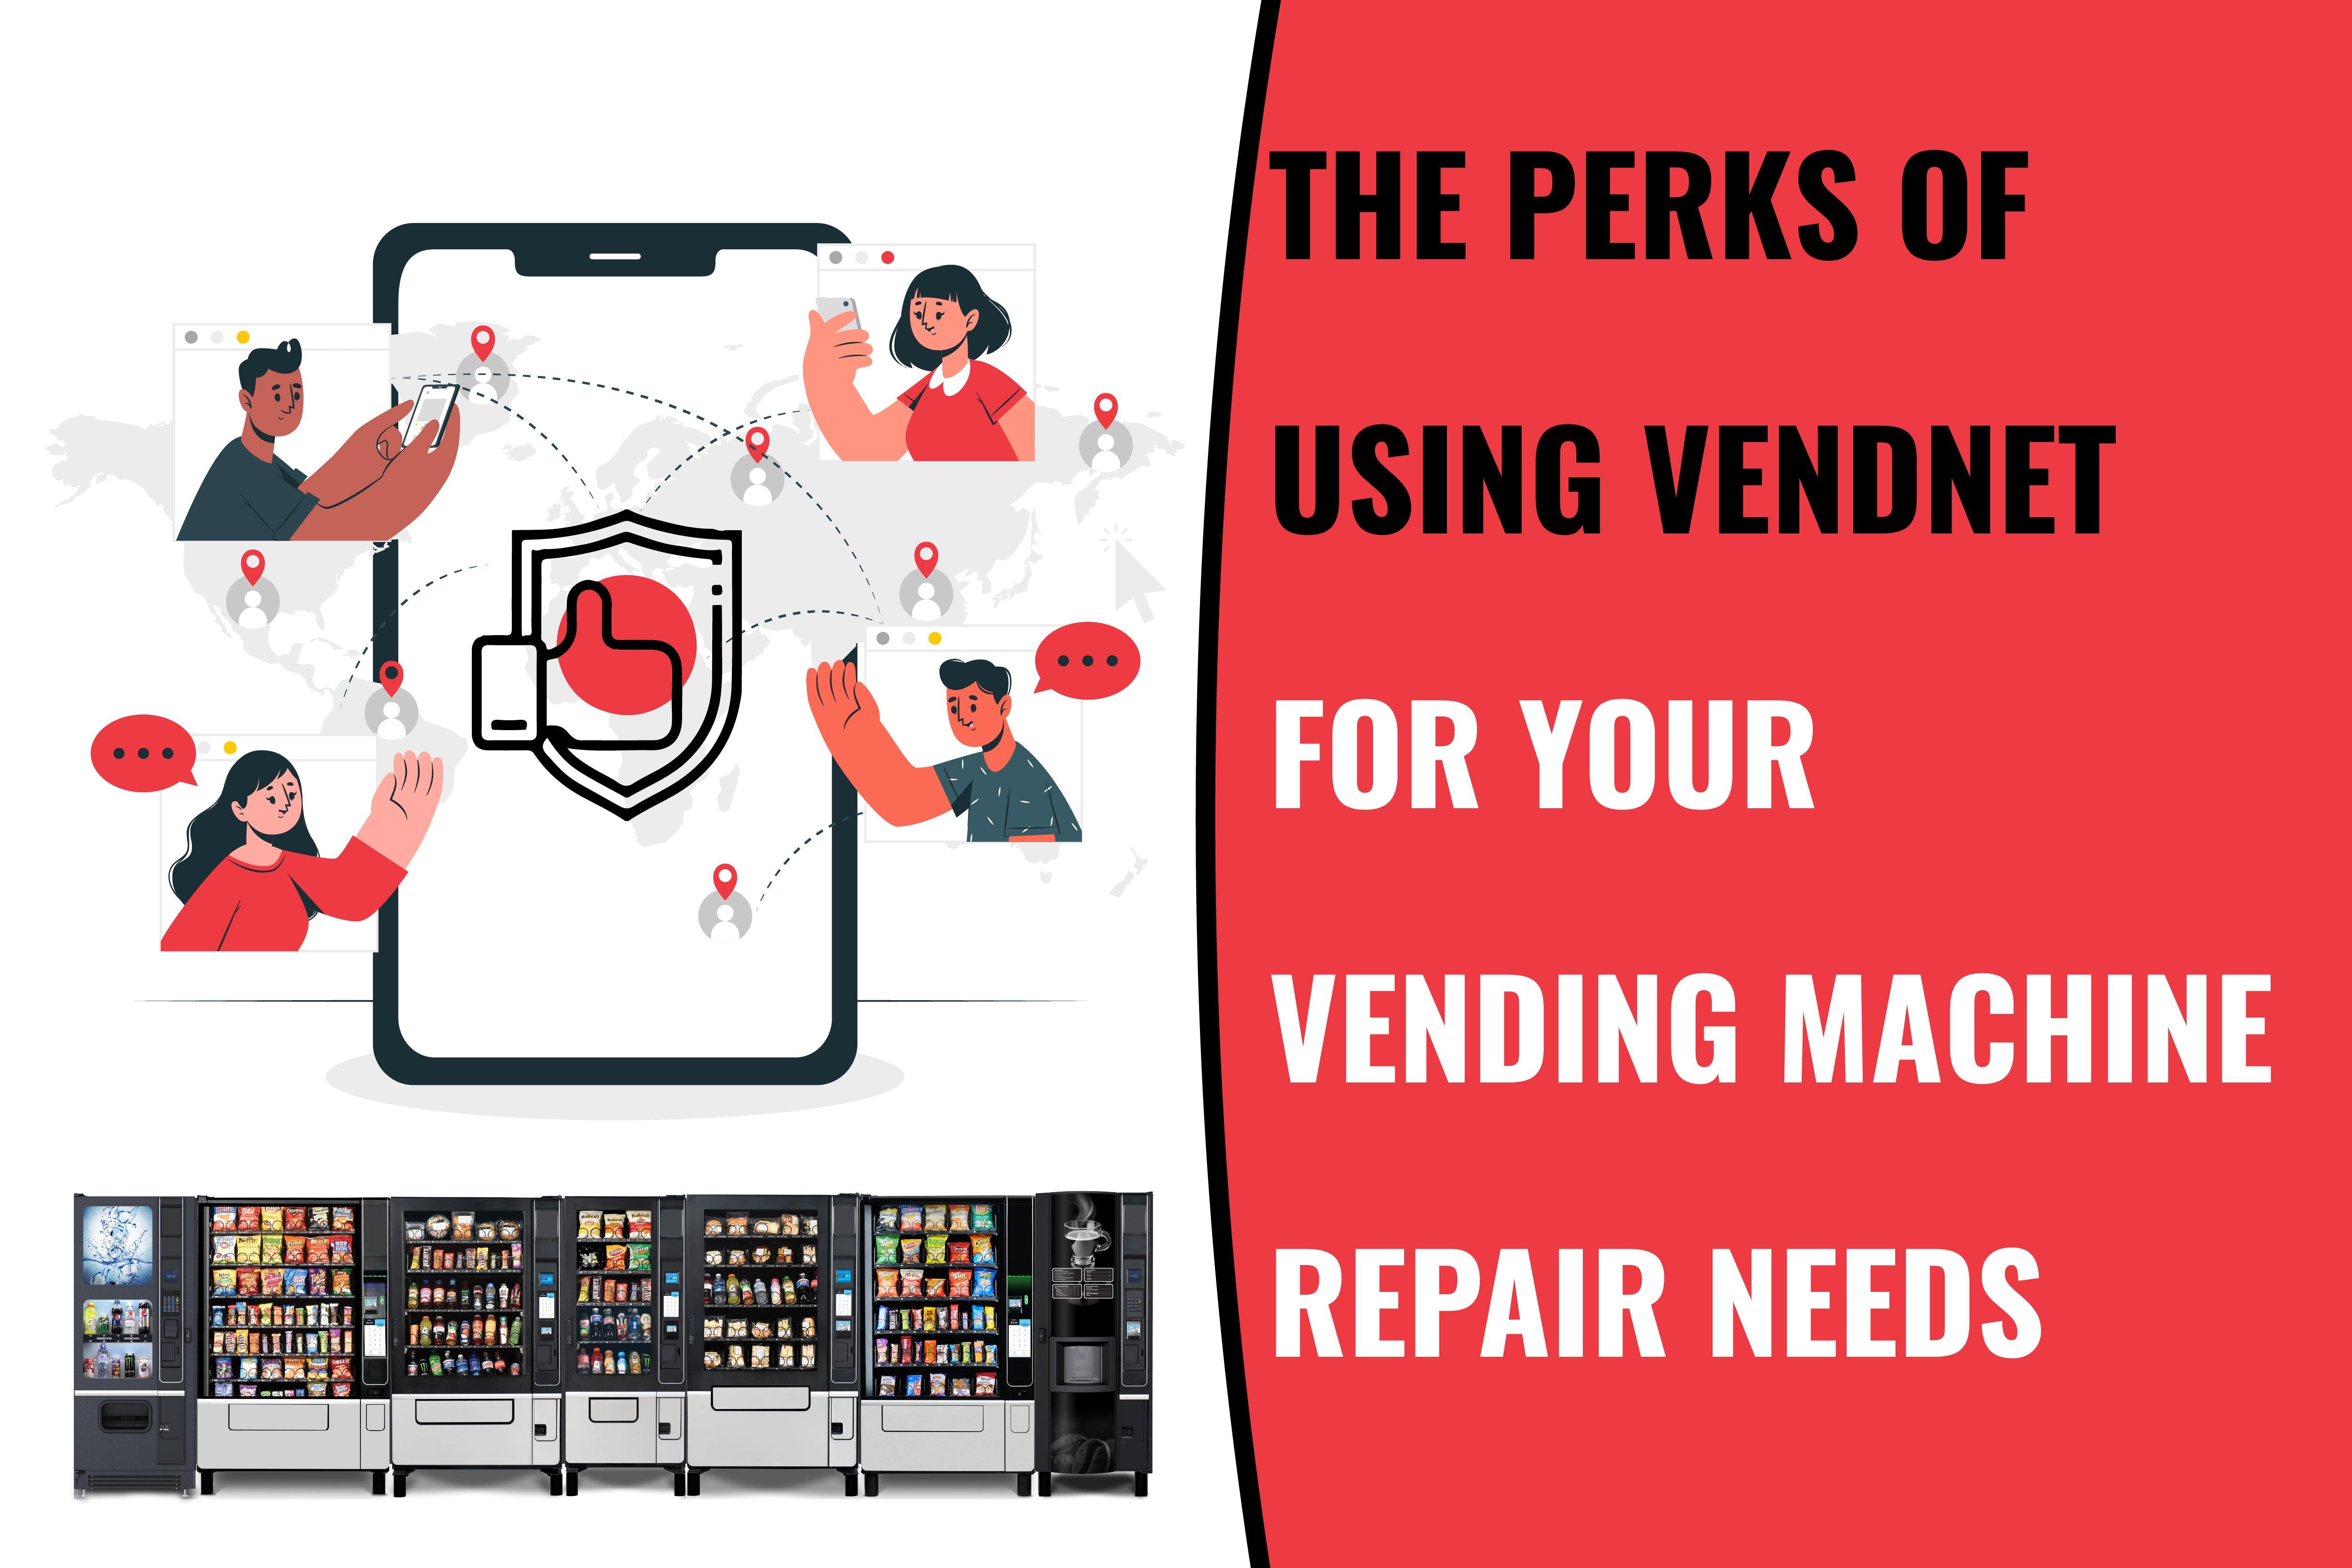 Vendnet: The Perks of Using Vendnet for Your Vending Machine Repair Needs - Vendnet